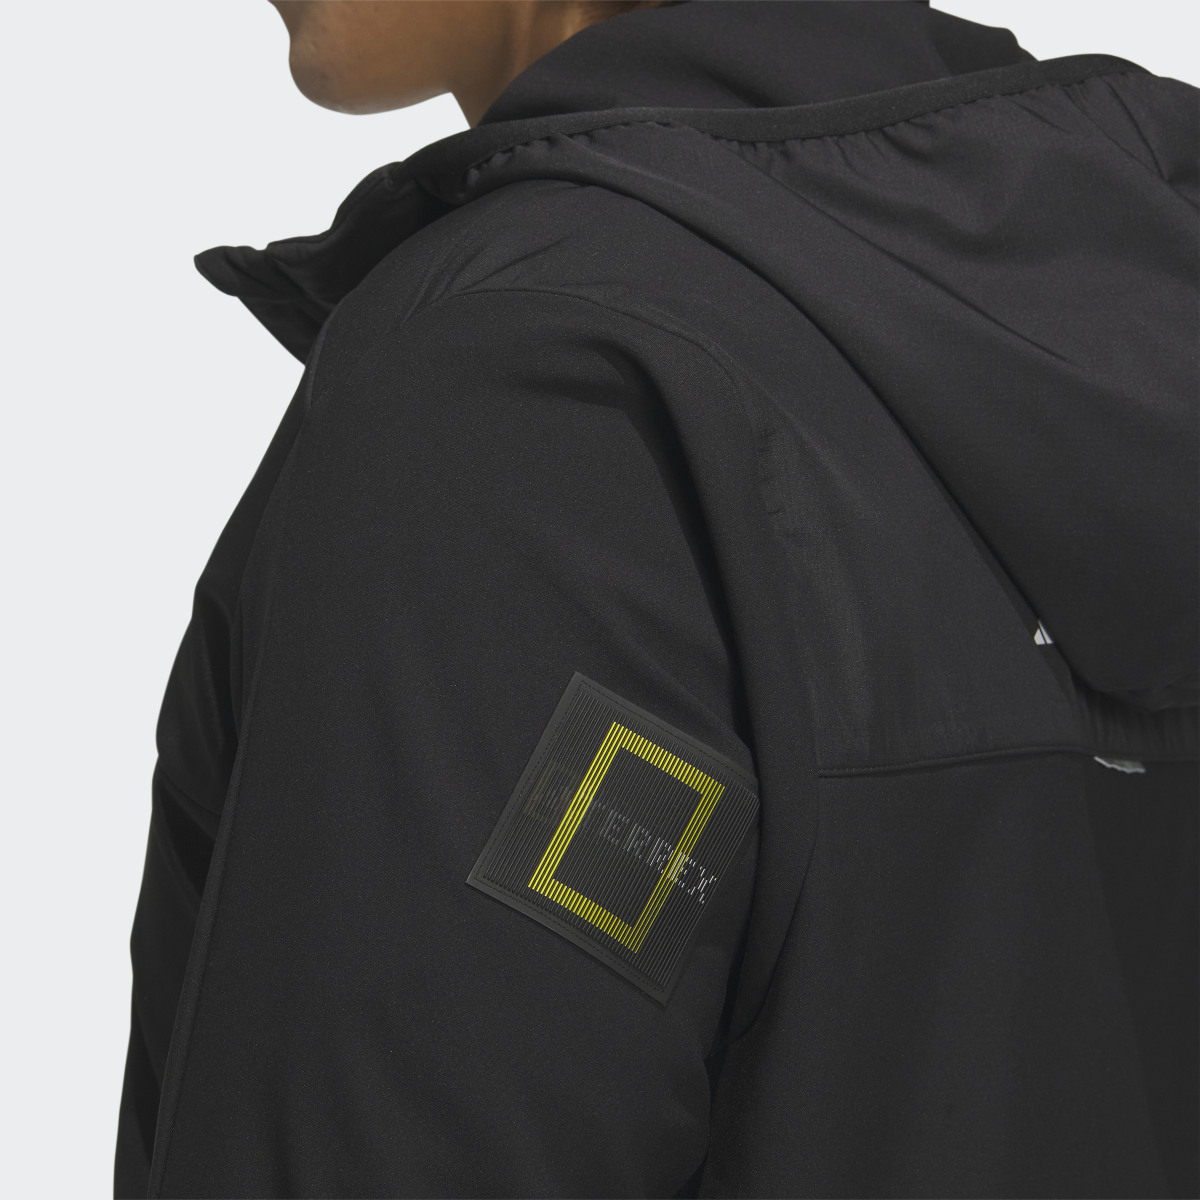 Adidas National Geographic Soft Shell Jacket. 7